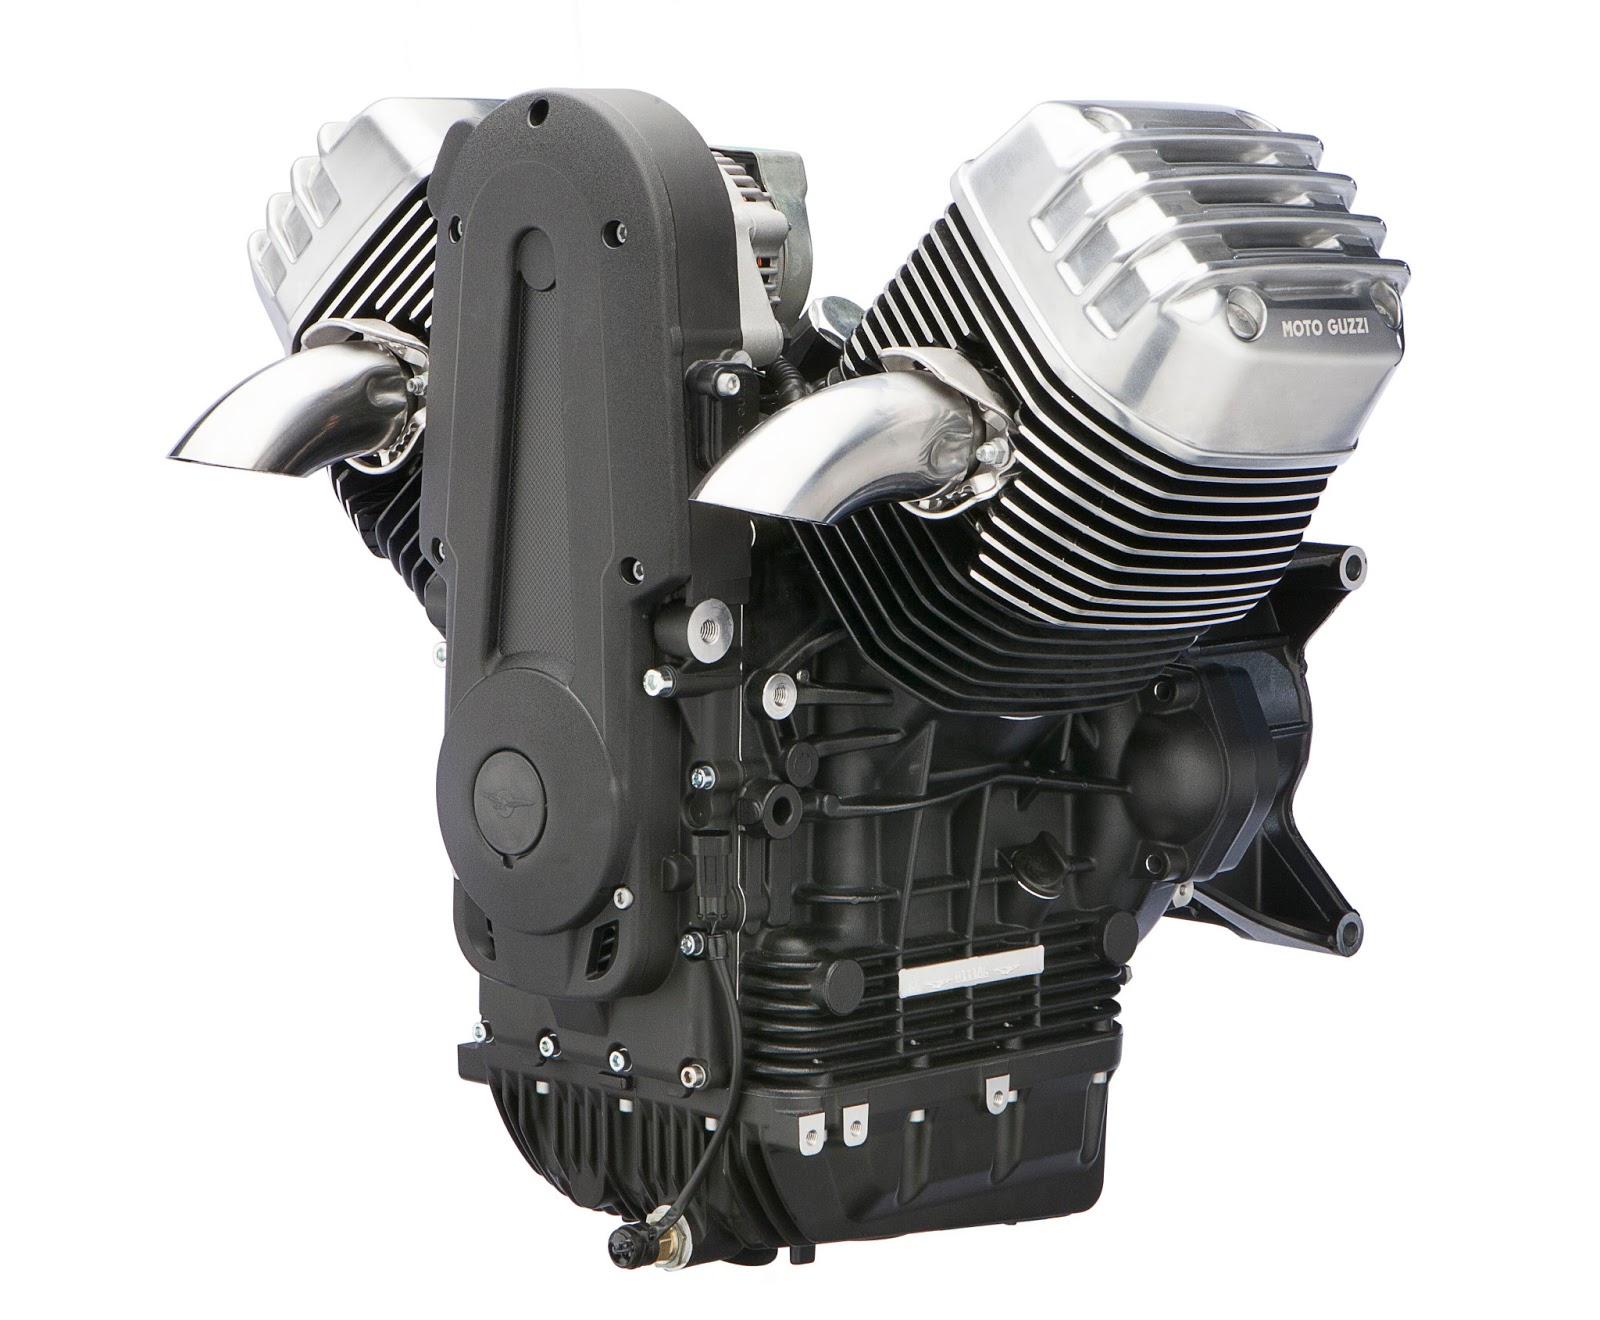 Мотор байка. Мотор 166fmm. Мотор v Твин-2. Moto Guzzi двигатель. : Moto Guzzi 150 двигатель.